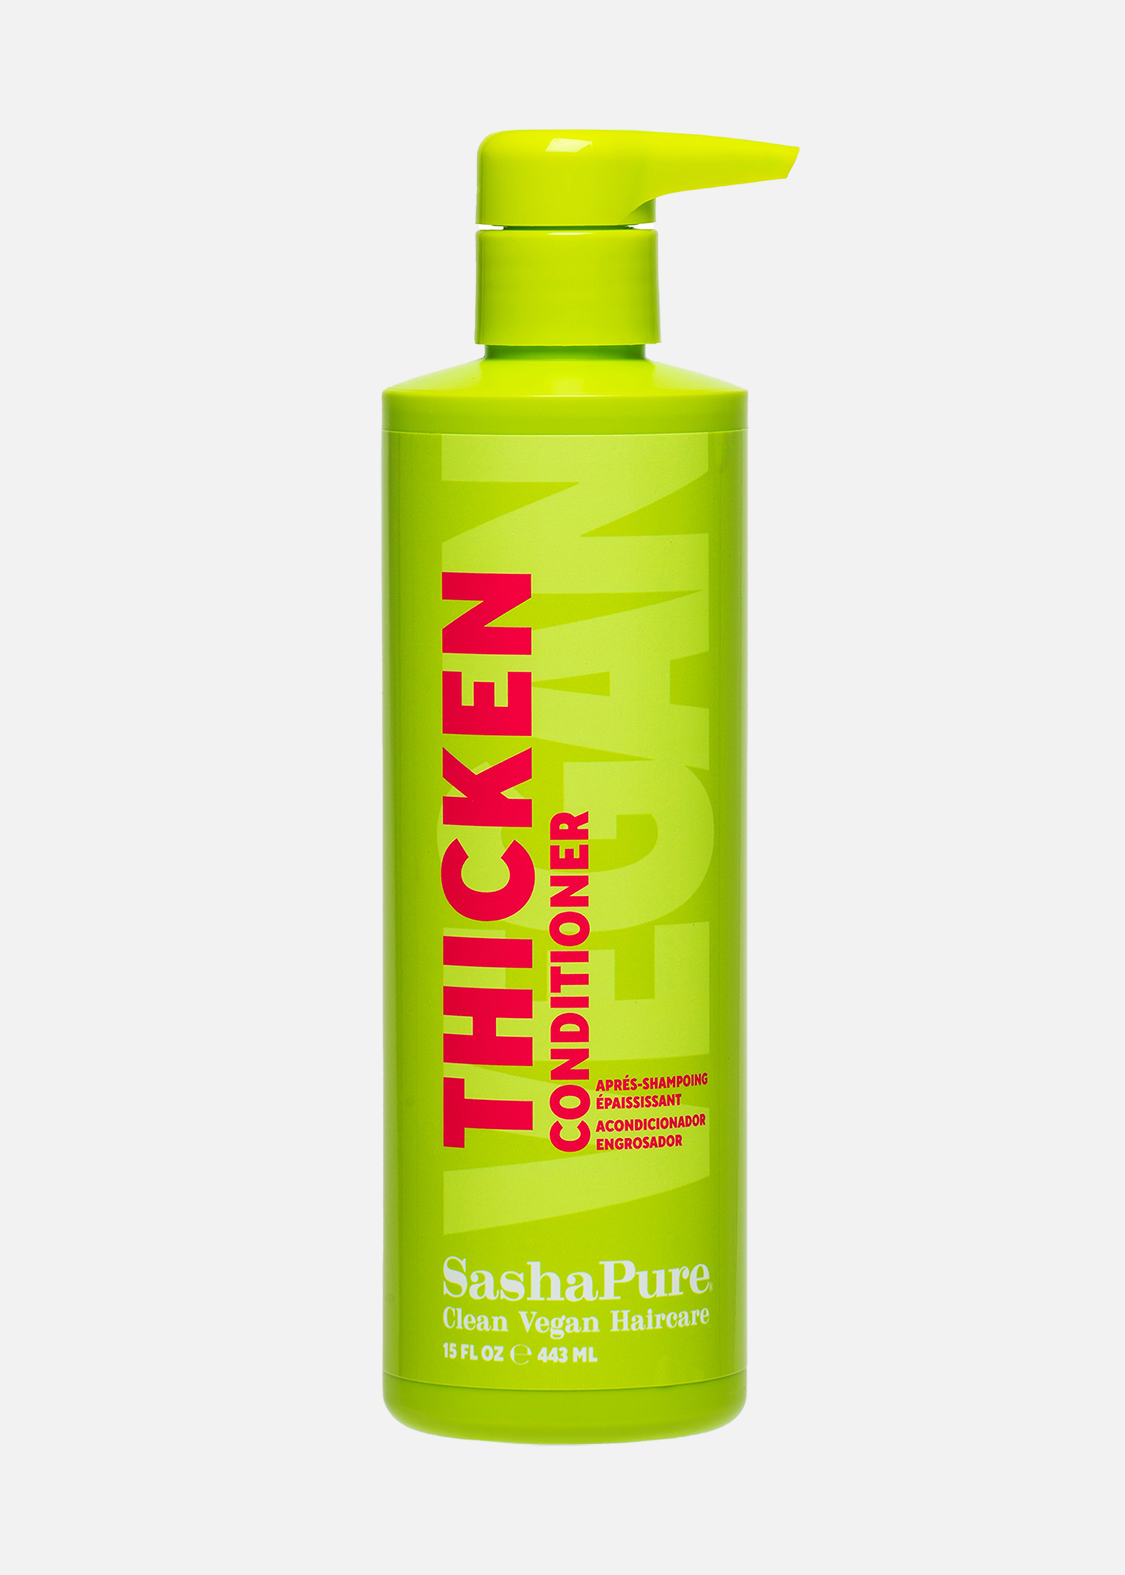 Fructis Pure Clean 10-in-1 Leave-In Hair Treatment - Garnier